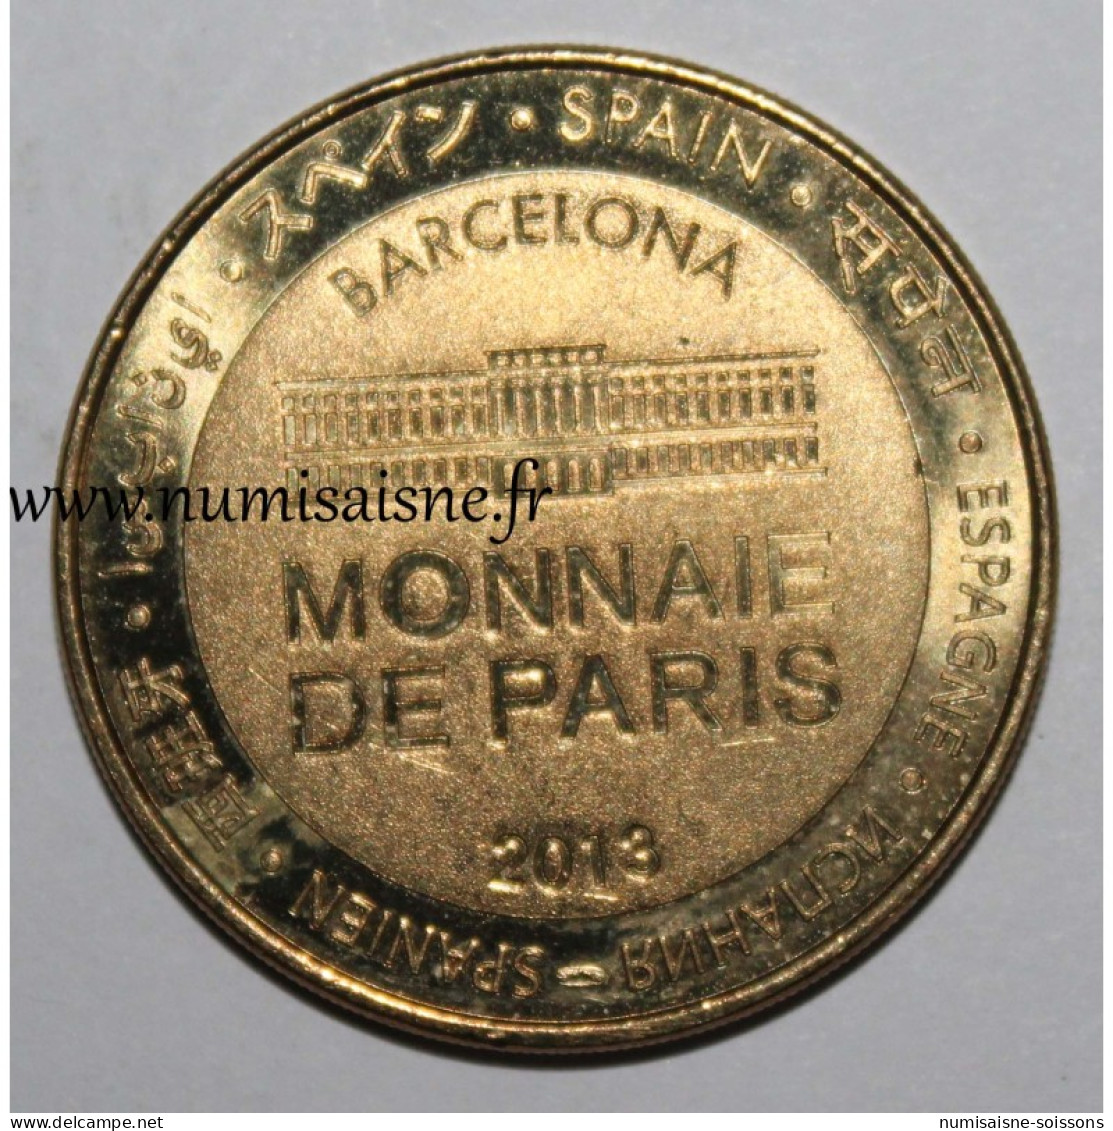 ESPAGNE - BARCELONE - SAGRADA FAMILIA - Monnaie De Paris - 2013 - 2013